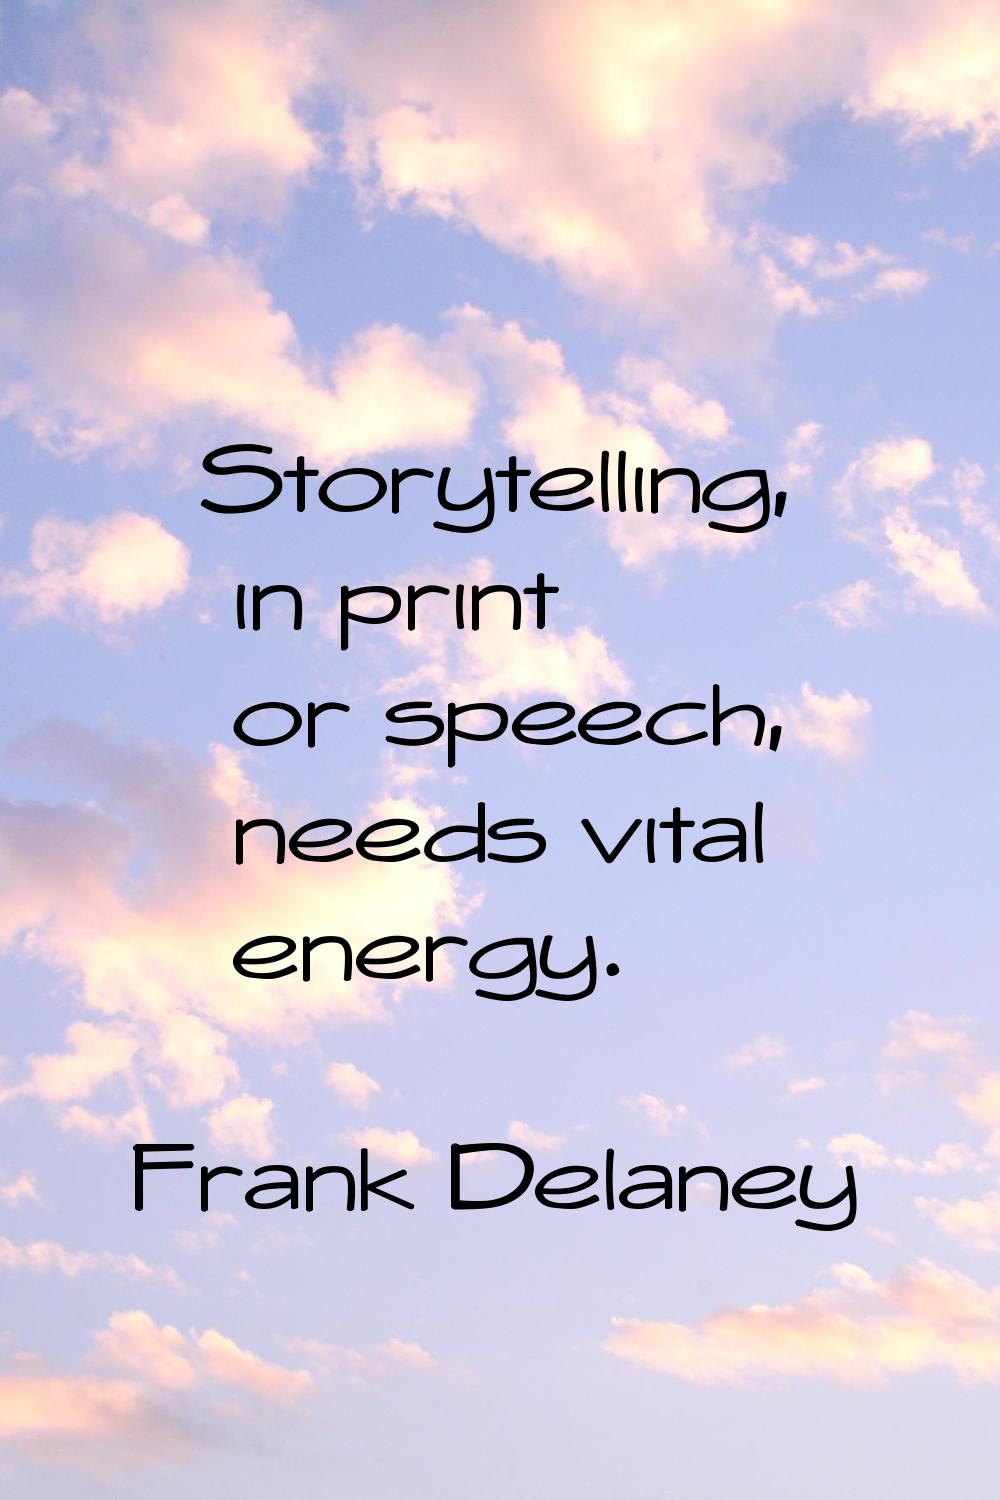 Storytelling, in print or speech, needs vital energy.